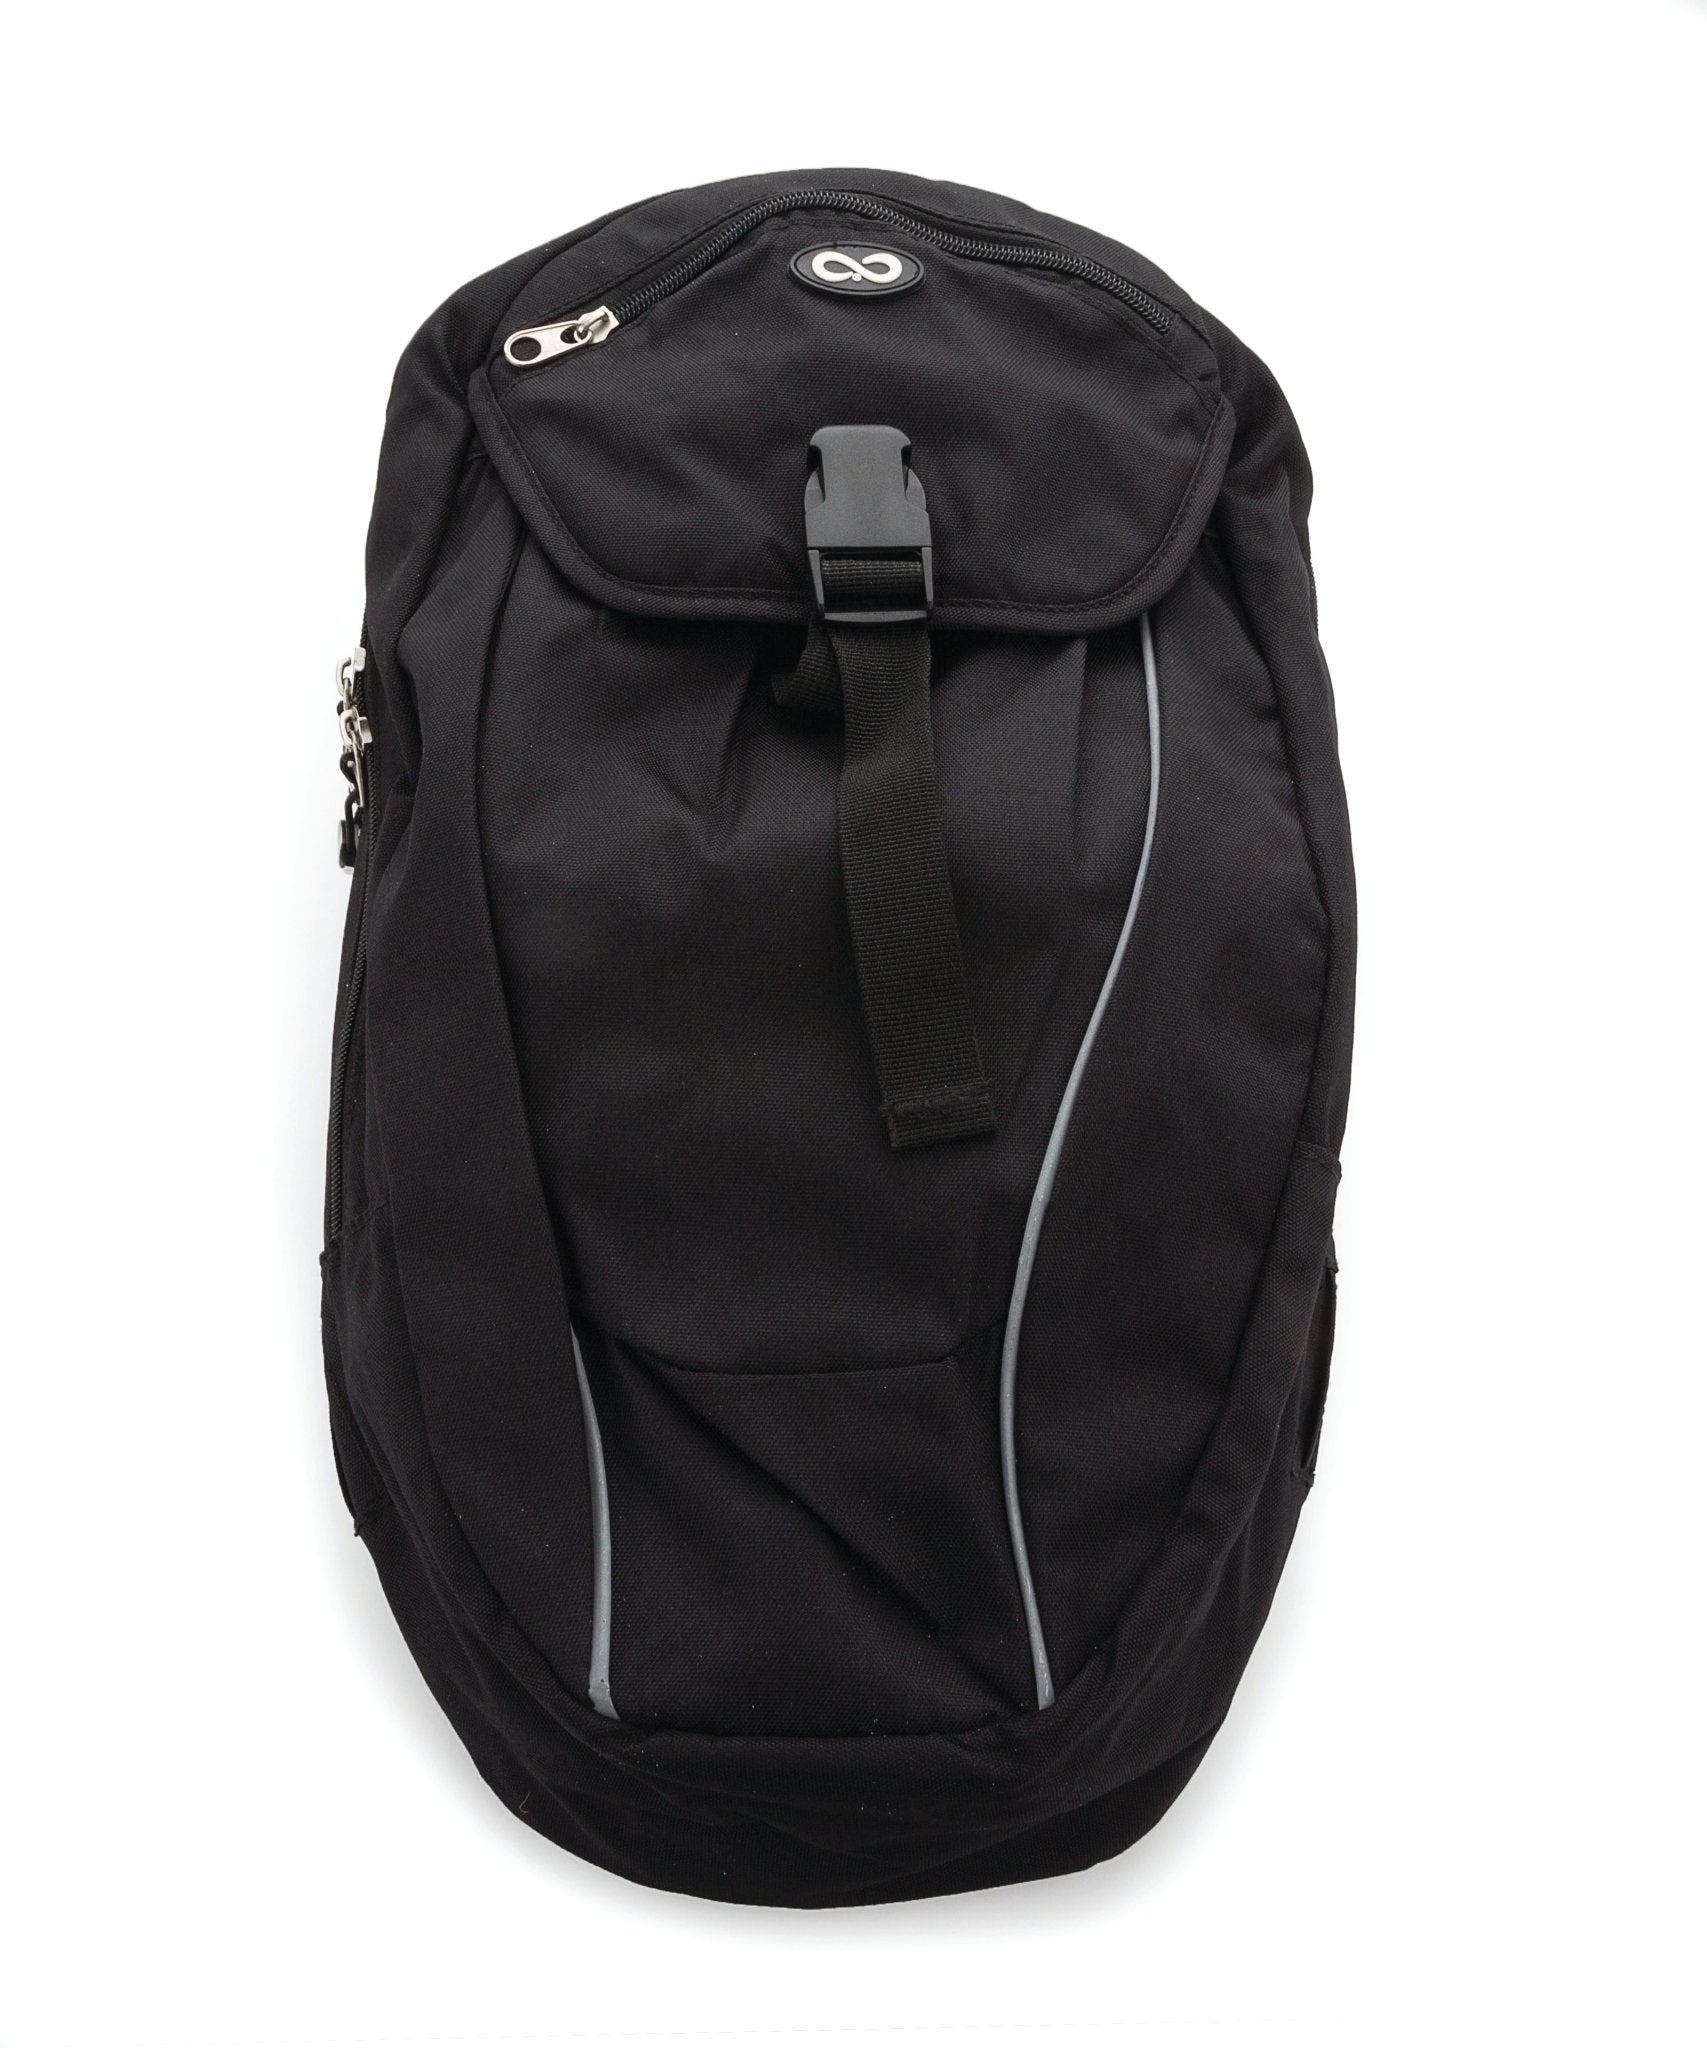 EA/1 - Adult Backpack For Entralite Infinity Pump, Black.